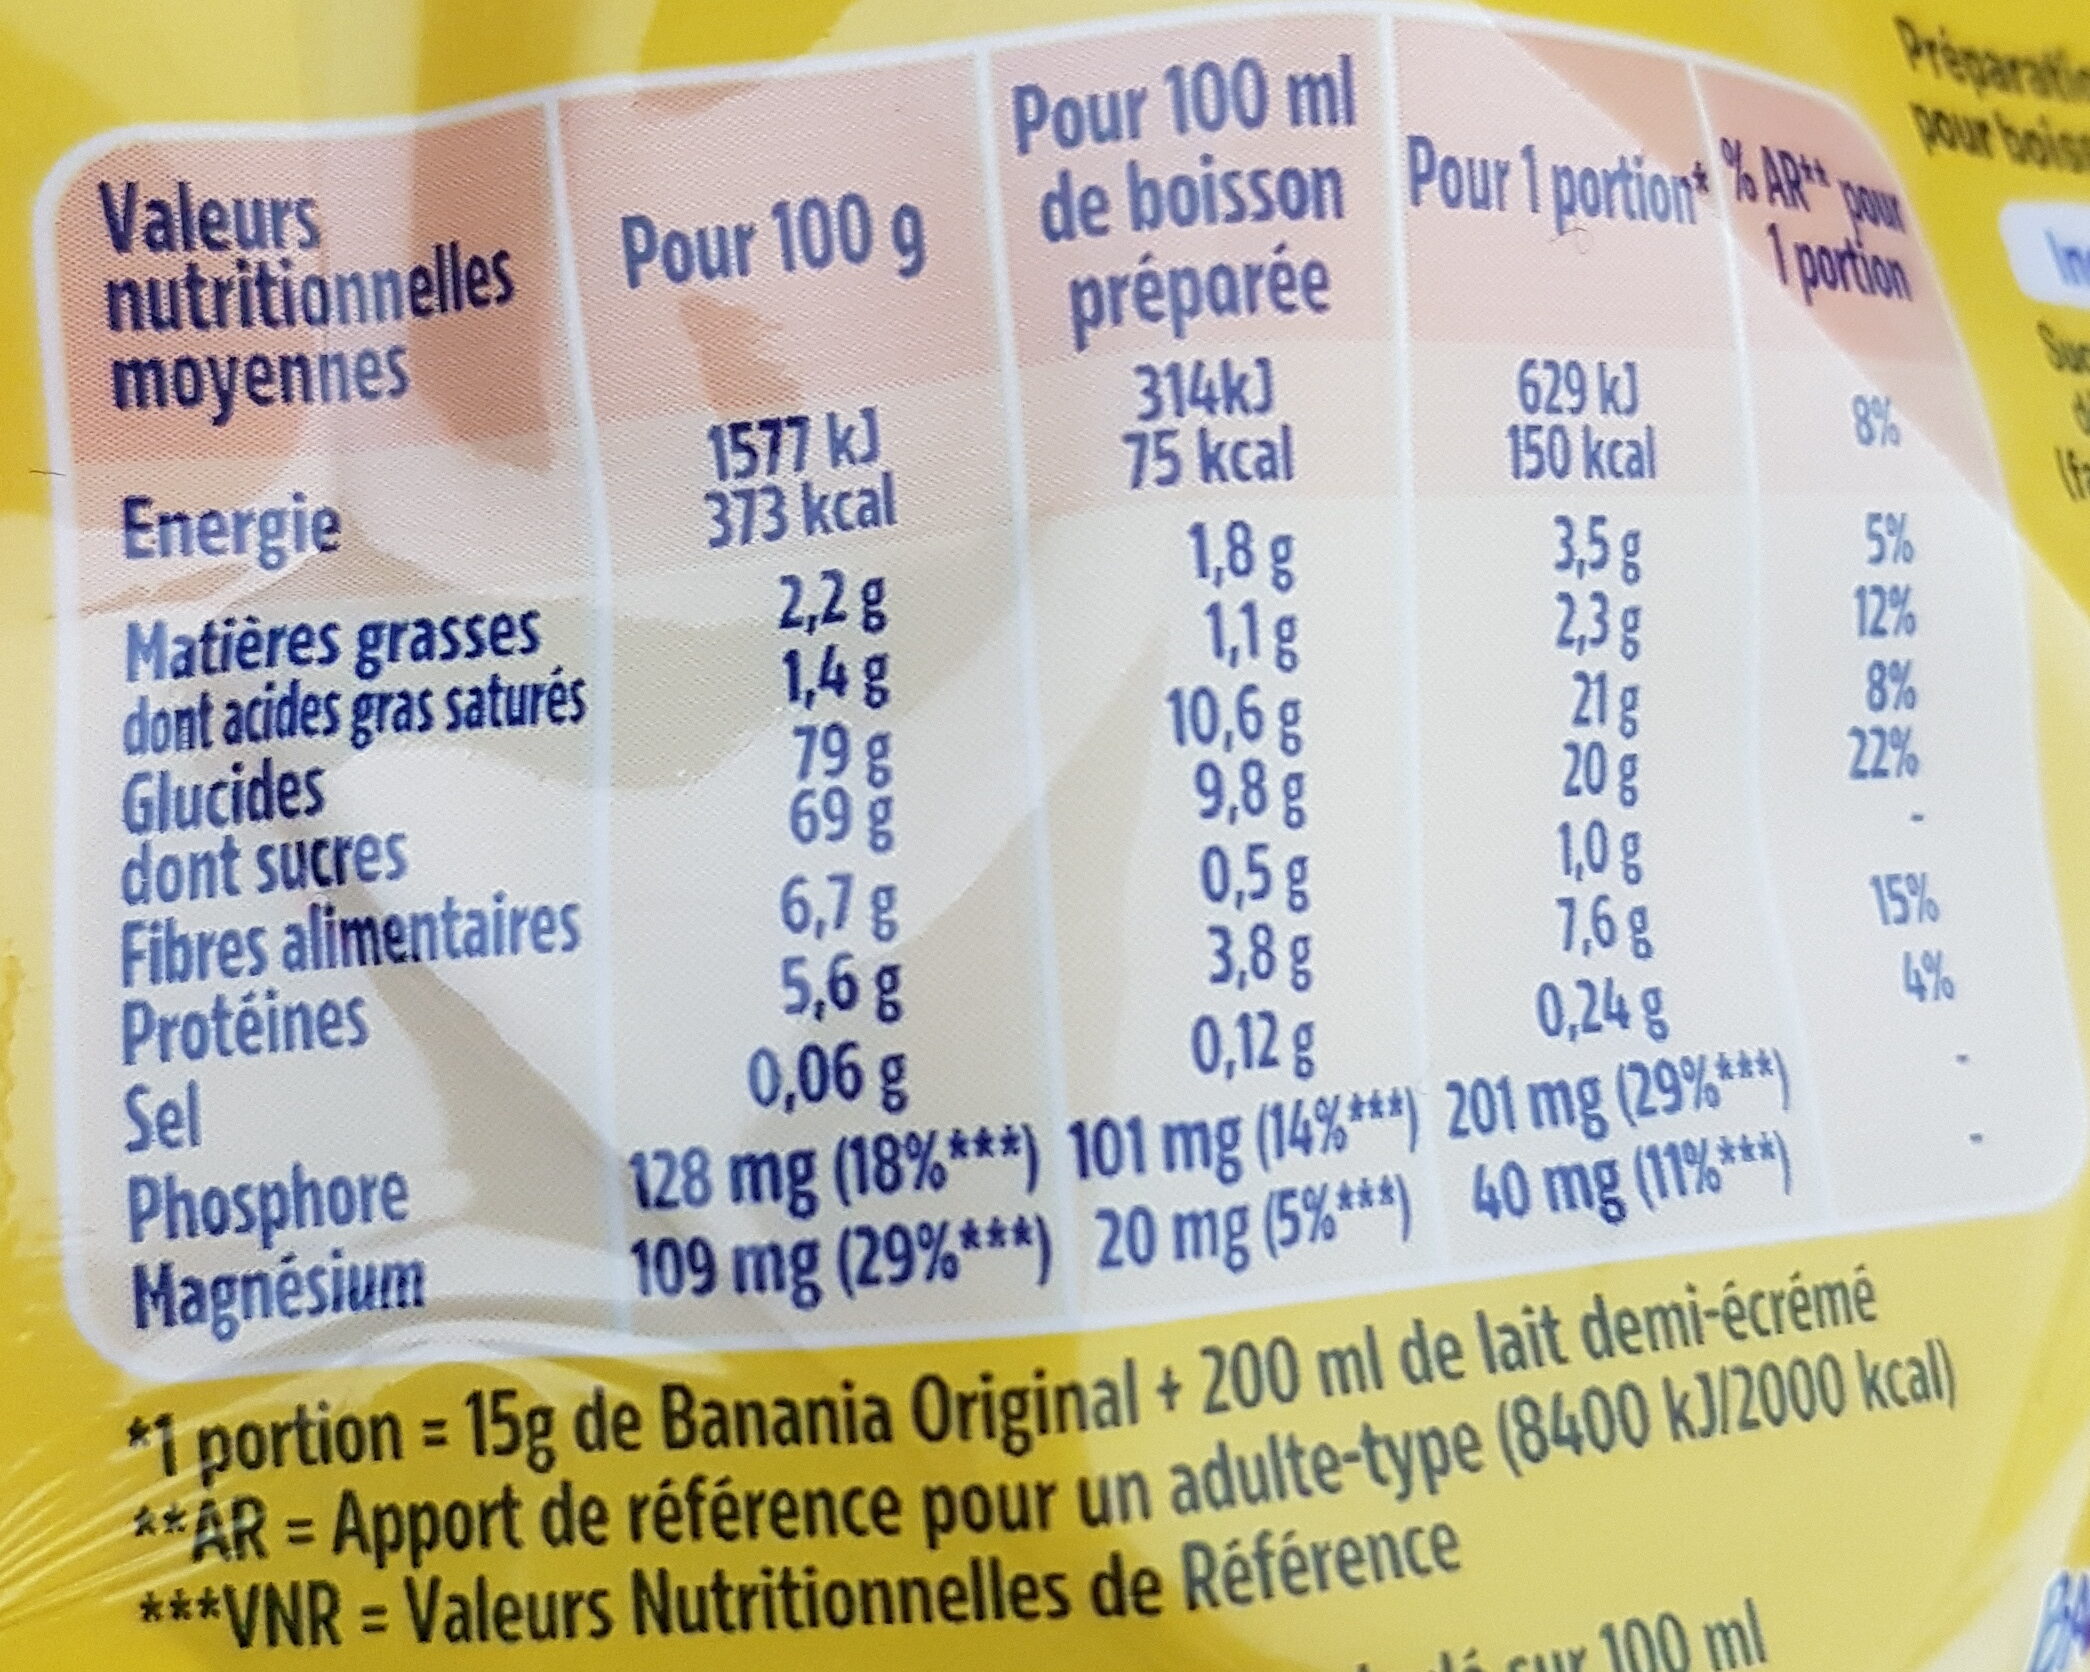 Banania Original - Tableau nutritionnel